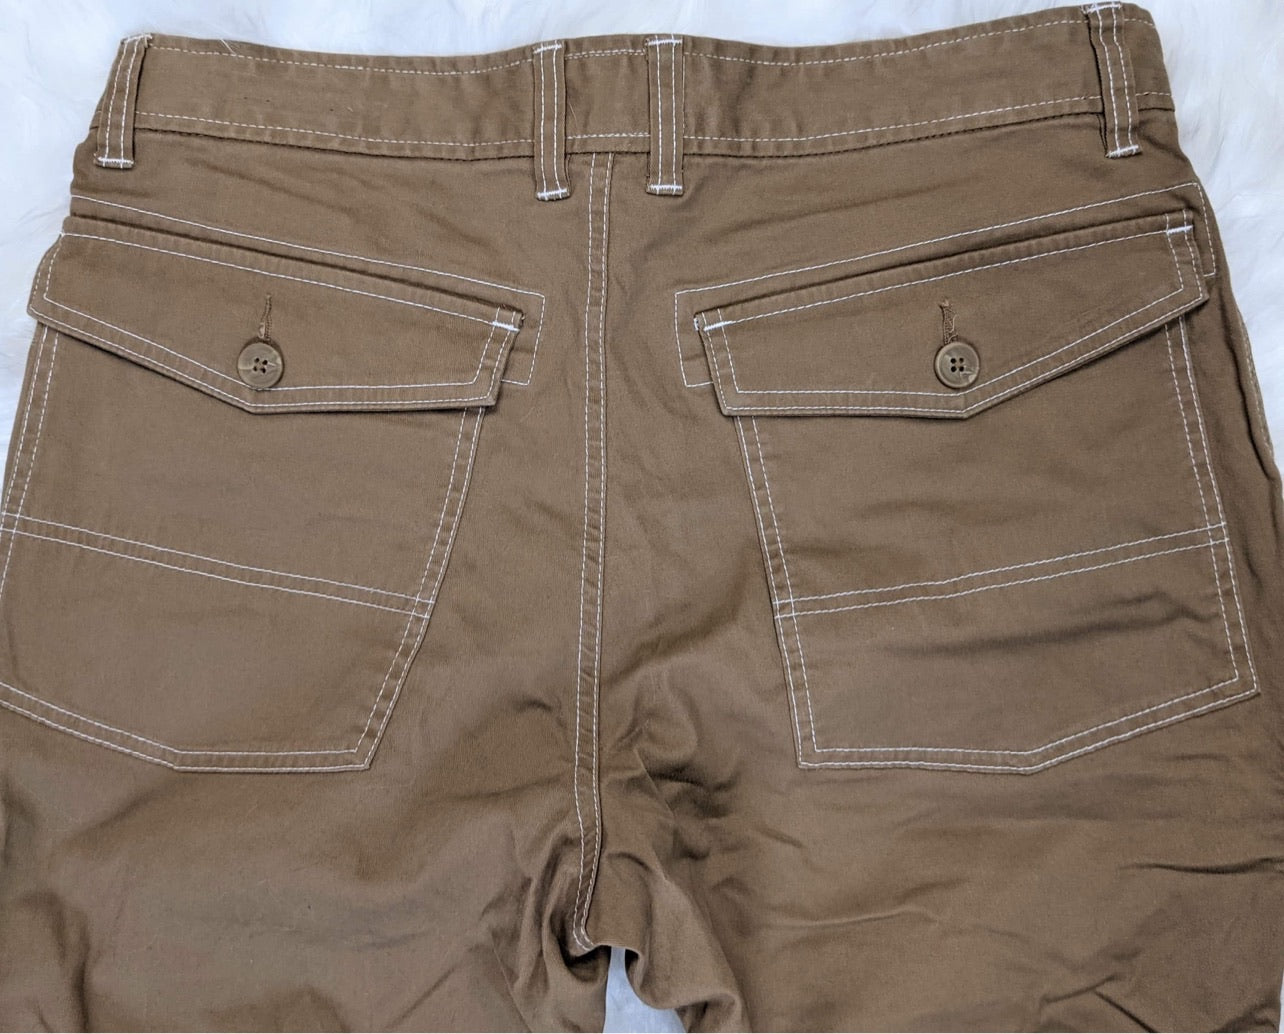 hiking pants cotton double knee patch knees jogger retro streetwear